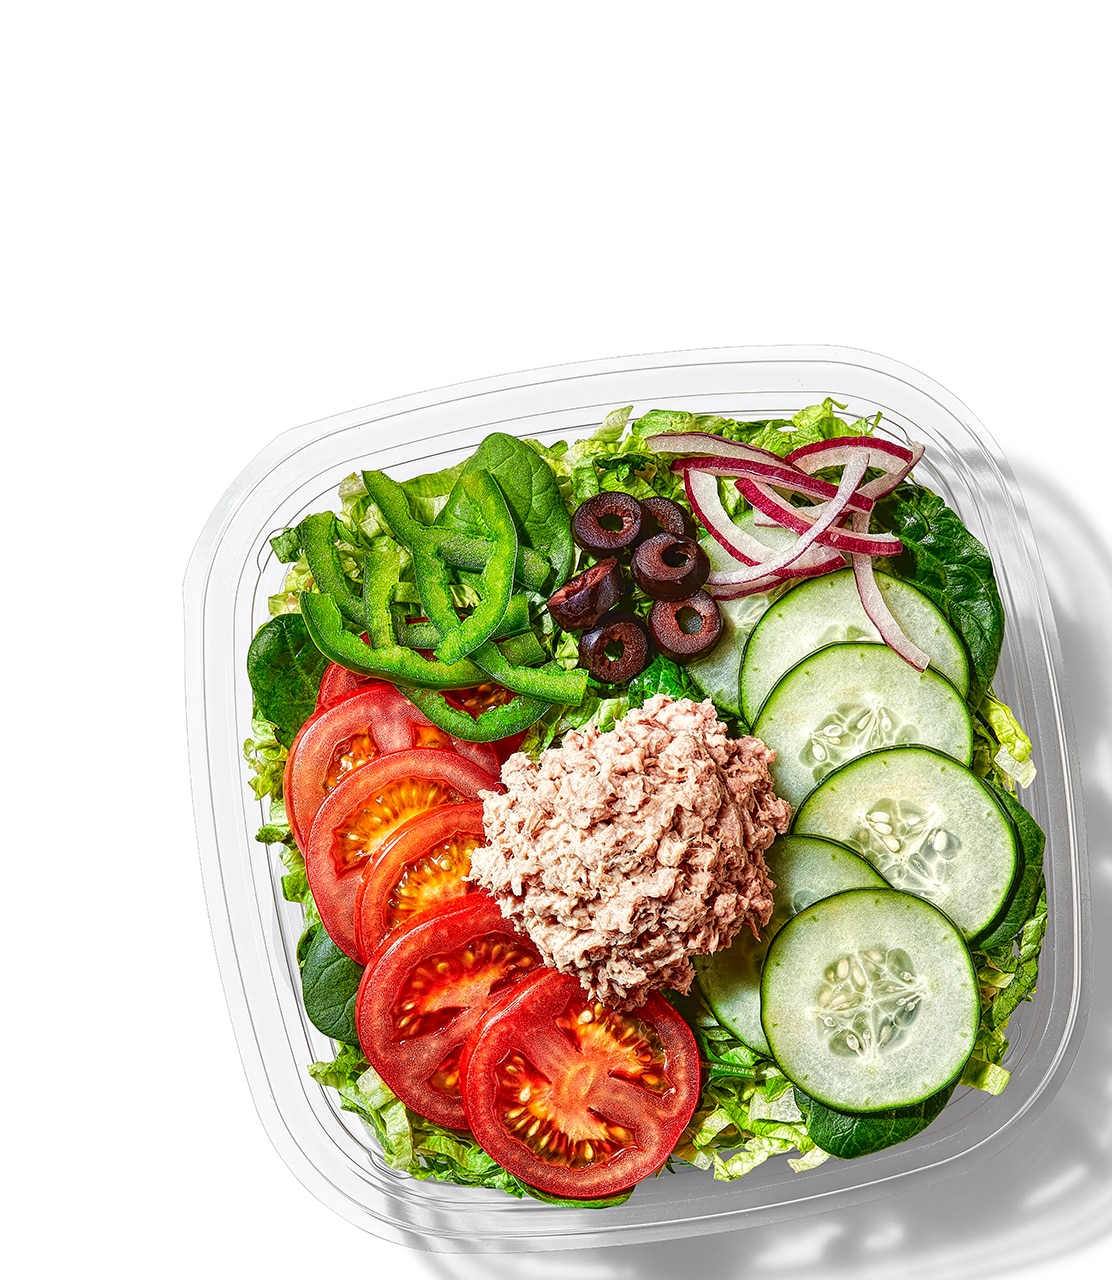 Calories in Subway Tuna Salad